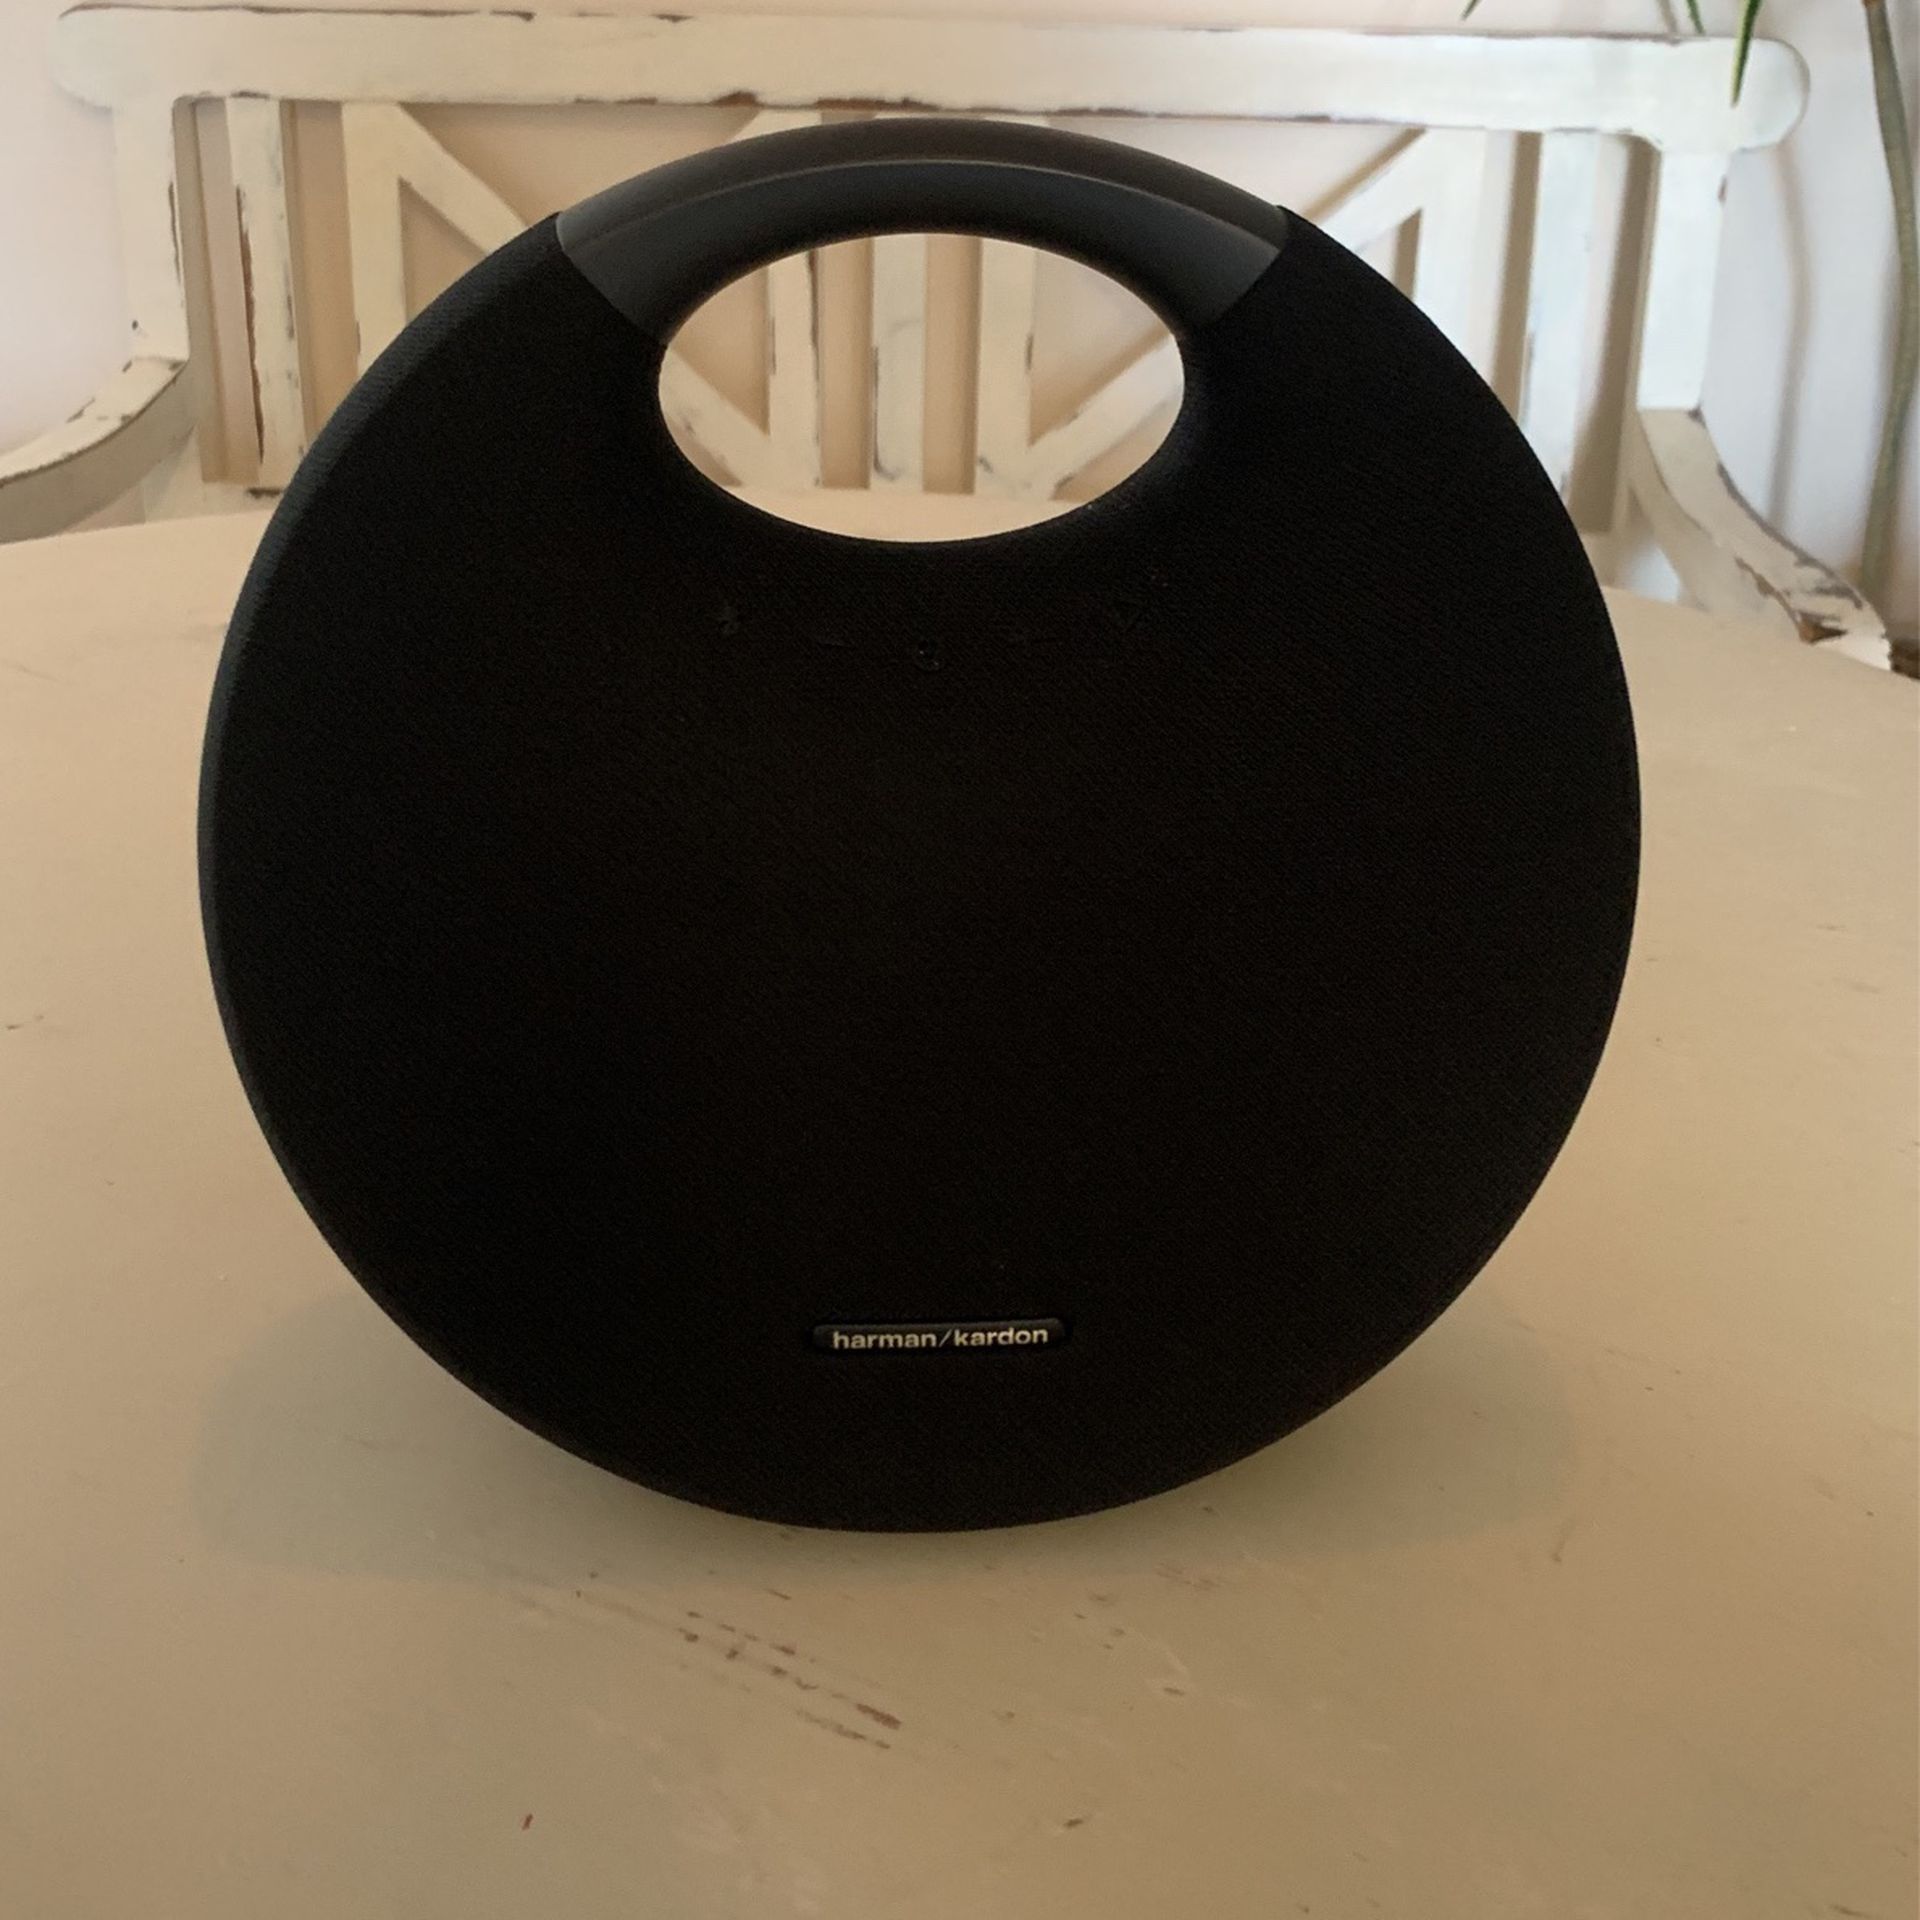 Harman/Kardon Oval Speaker, Sound Box